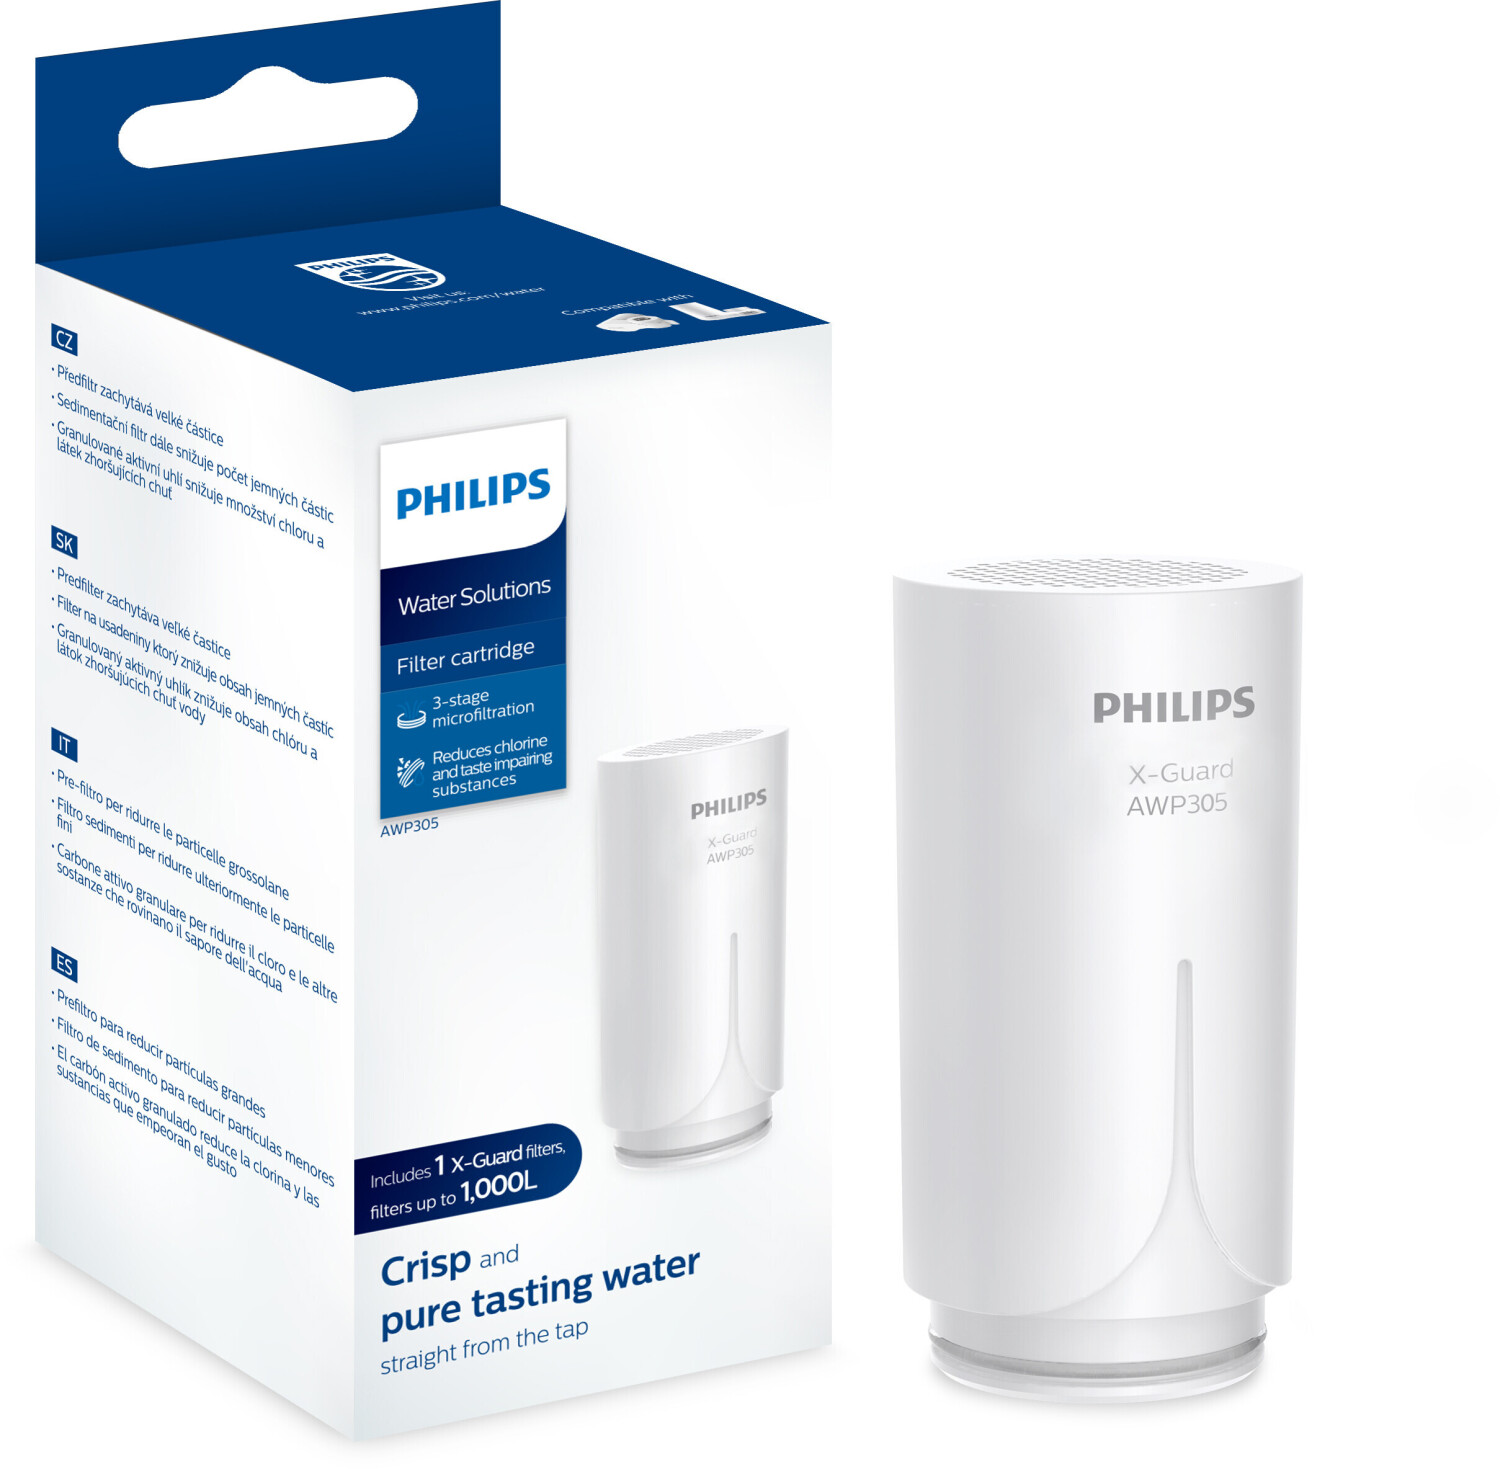 Philips Water Jarra con filtro de agua de 2,6 l con filtro Philips